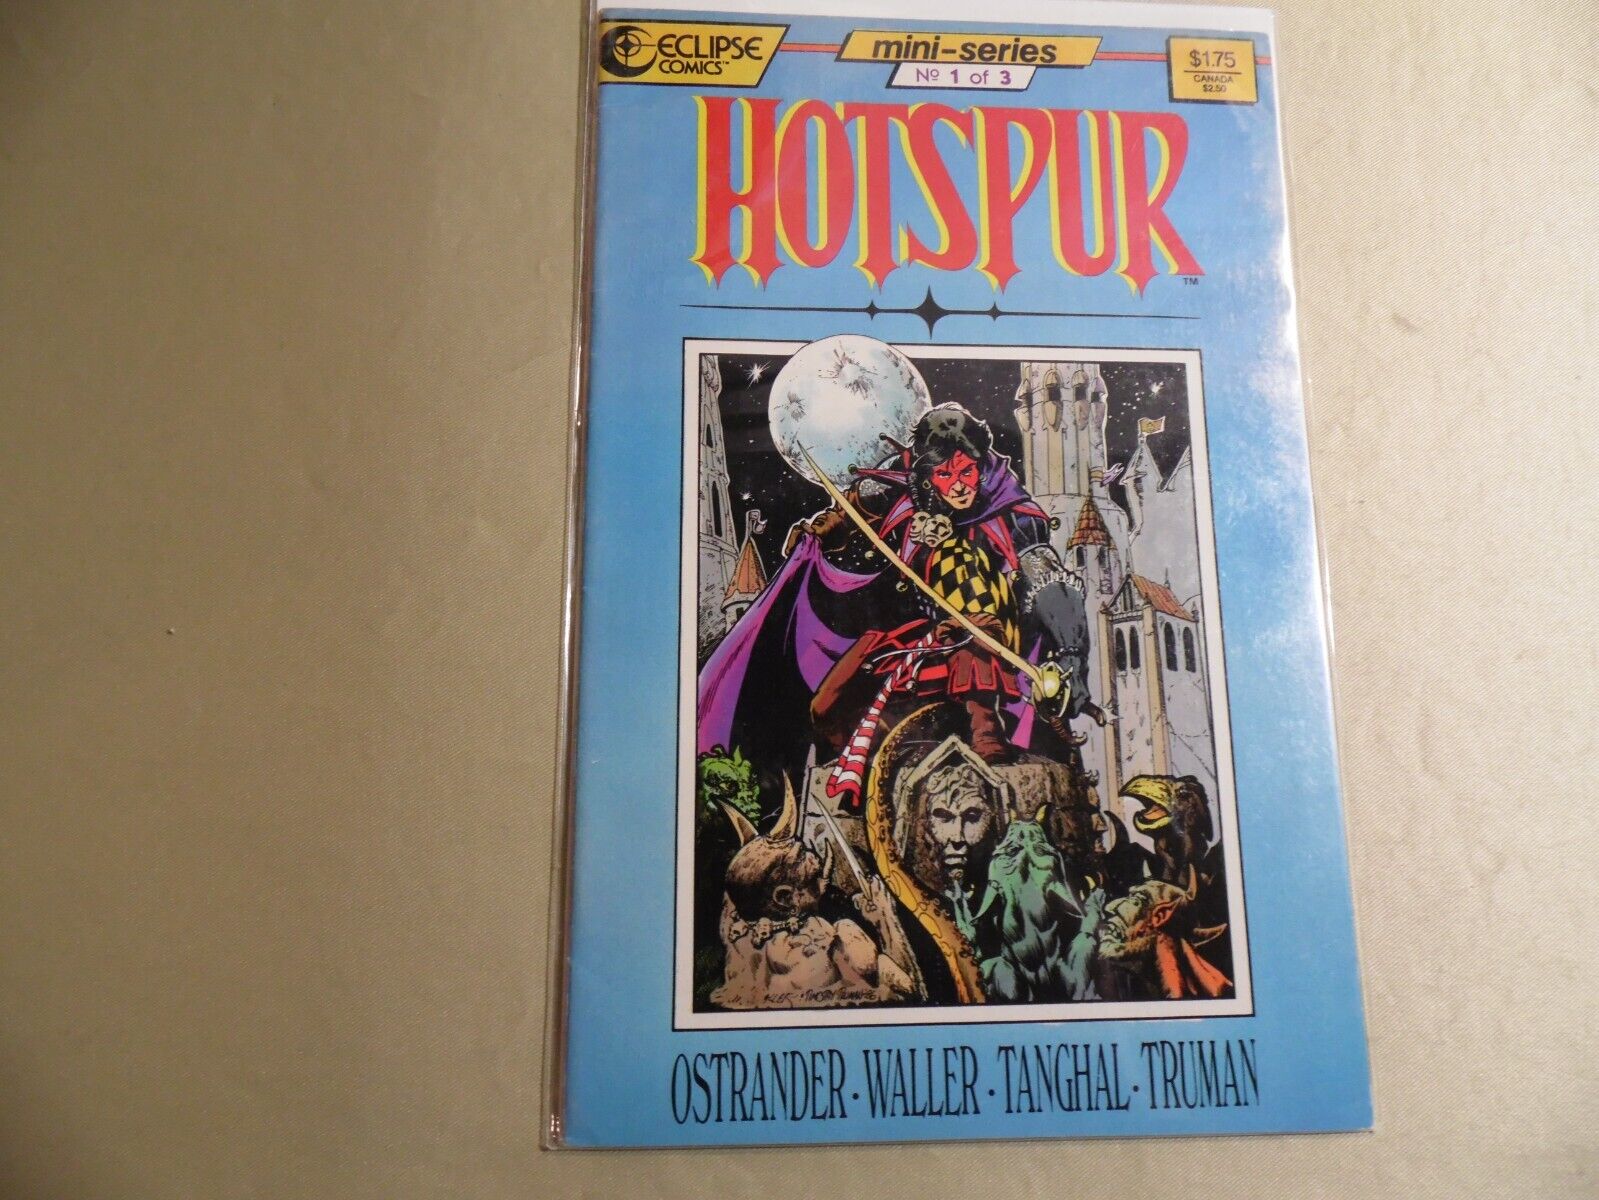 Hotspur #1 (Eclipse Comics 1987) Free Domestic Shipping